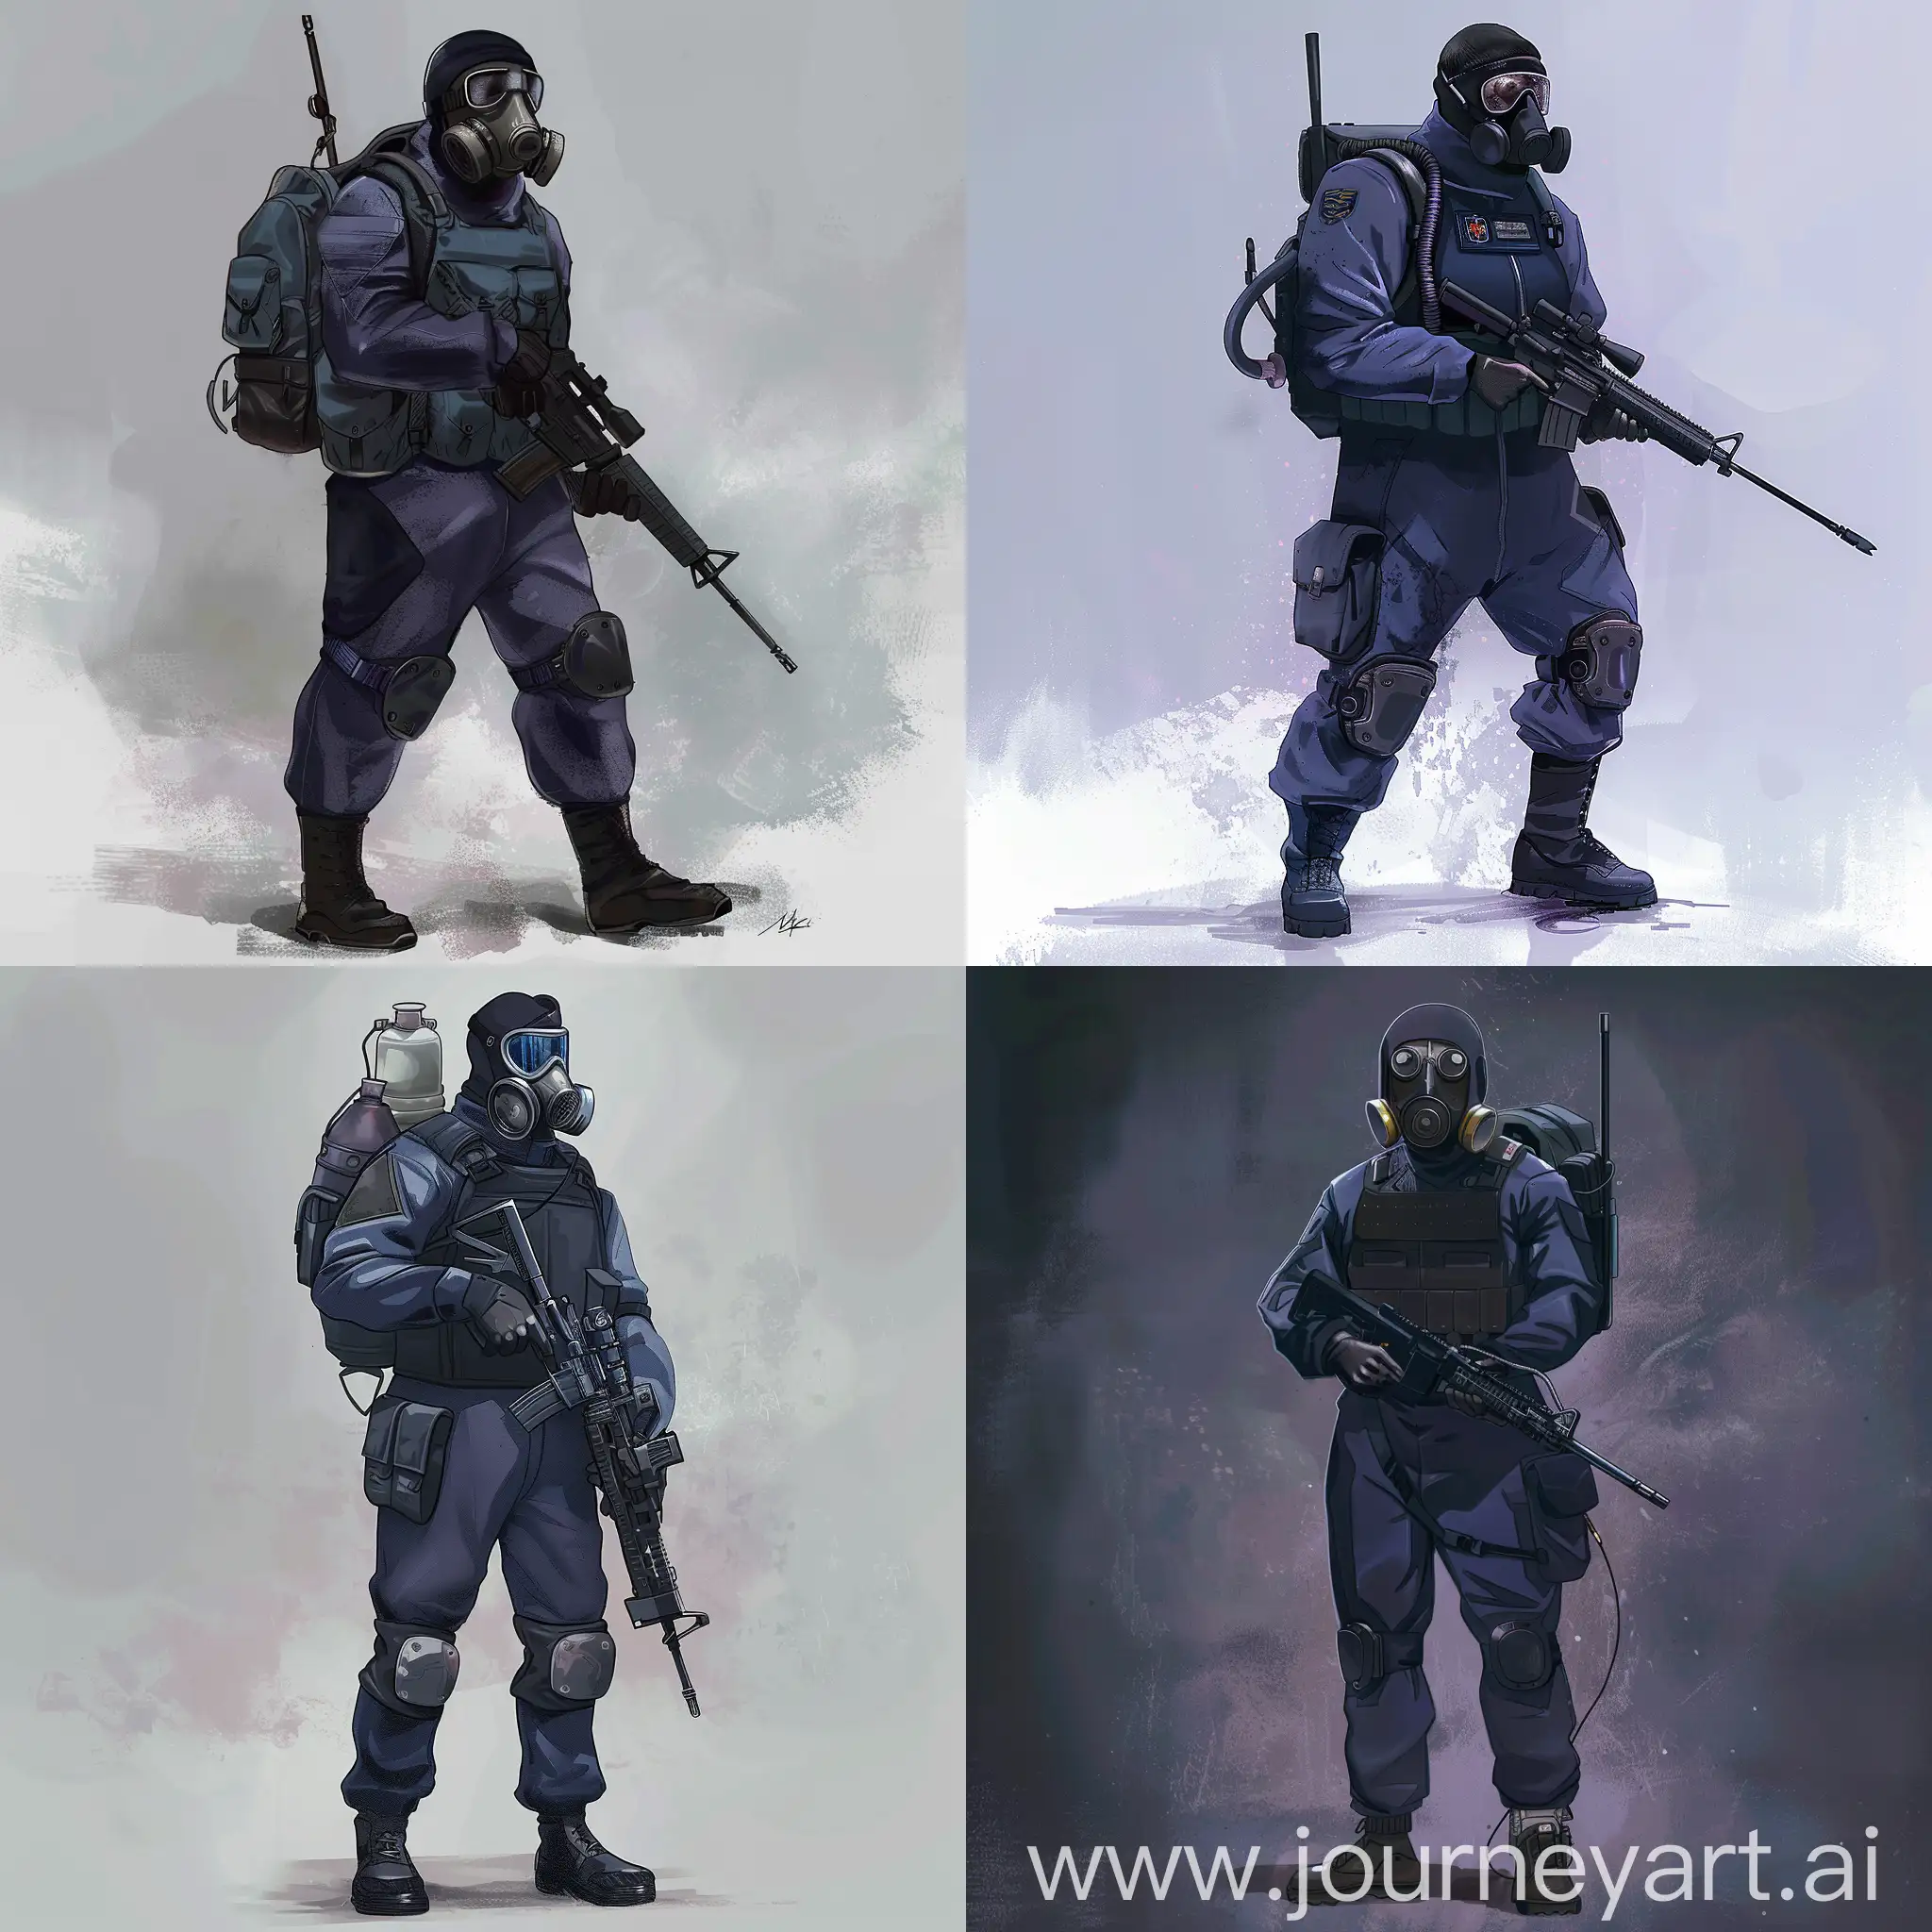 Soldier-in-Dark-Purple-Hazmat-Suit-with-Sniper-Rifle